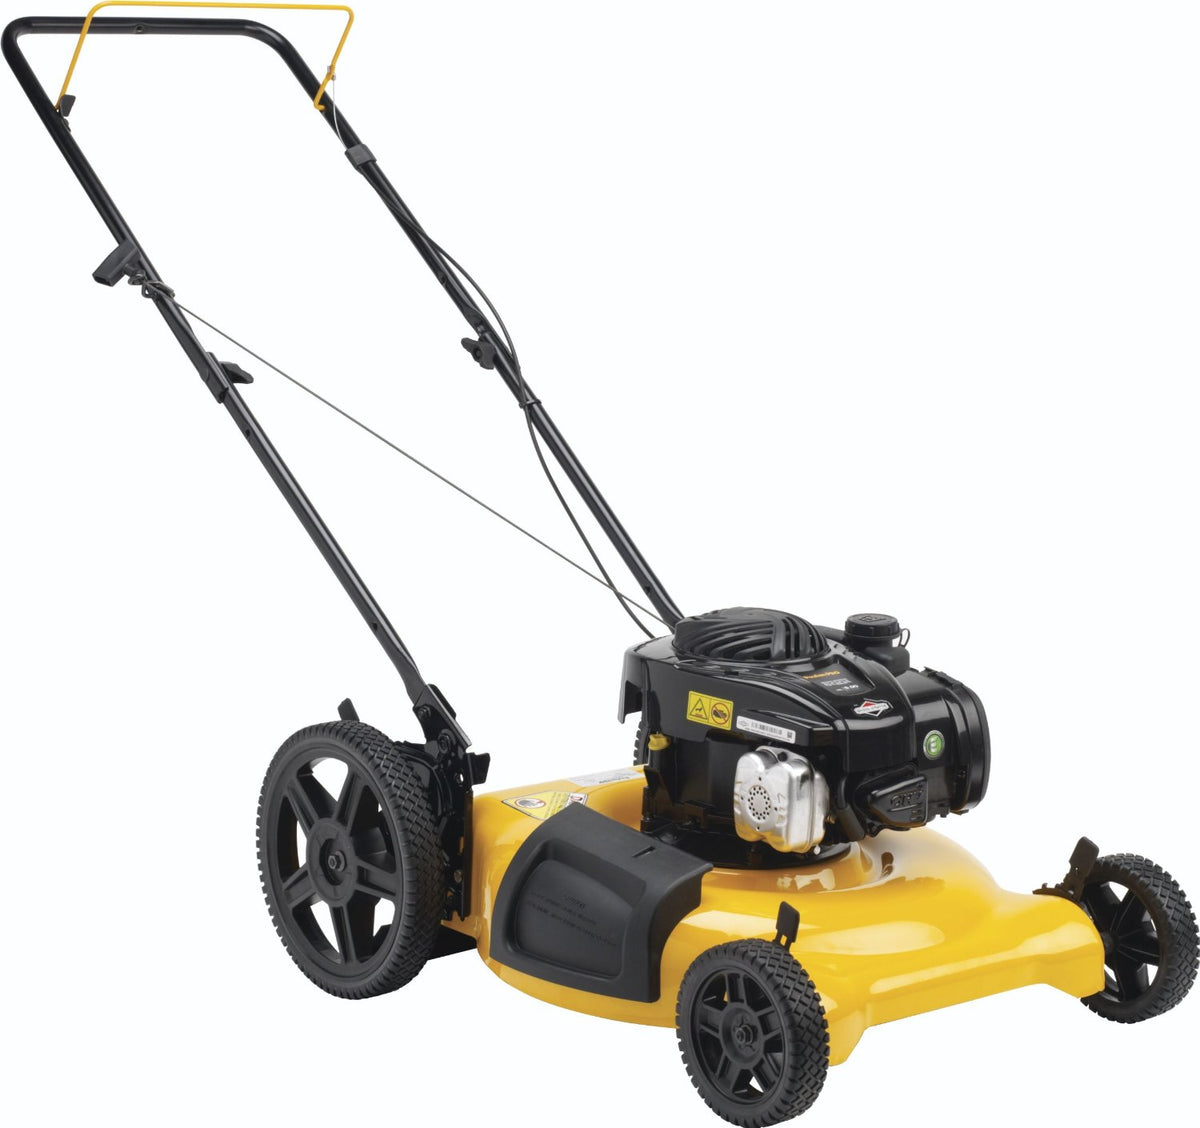 buy push lawn mowers at cheap rate in bulk. wholesale & retail lawn power tools store.